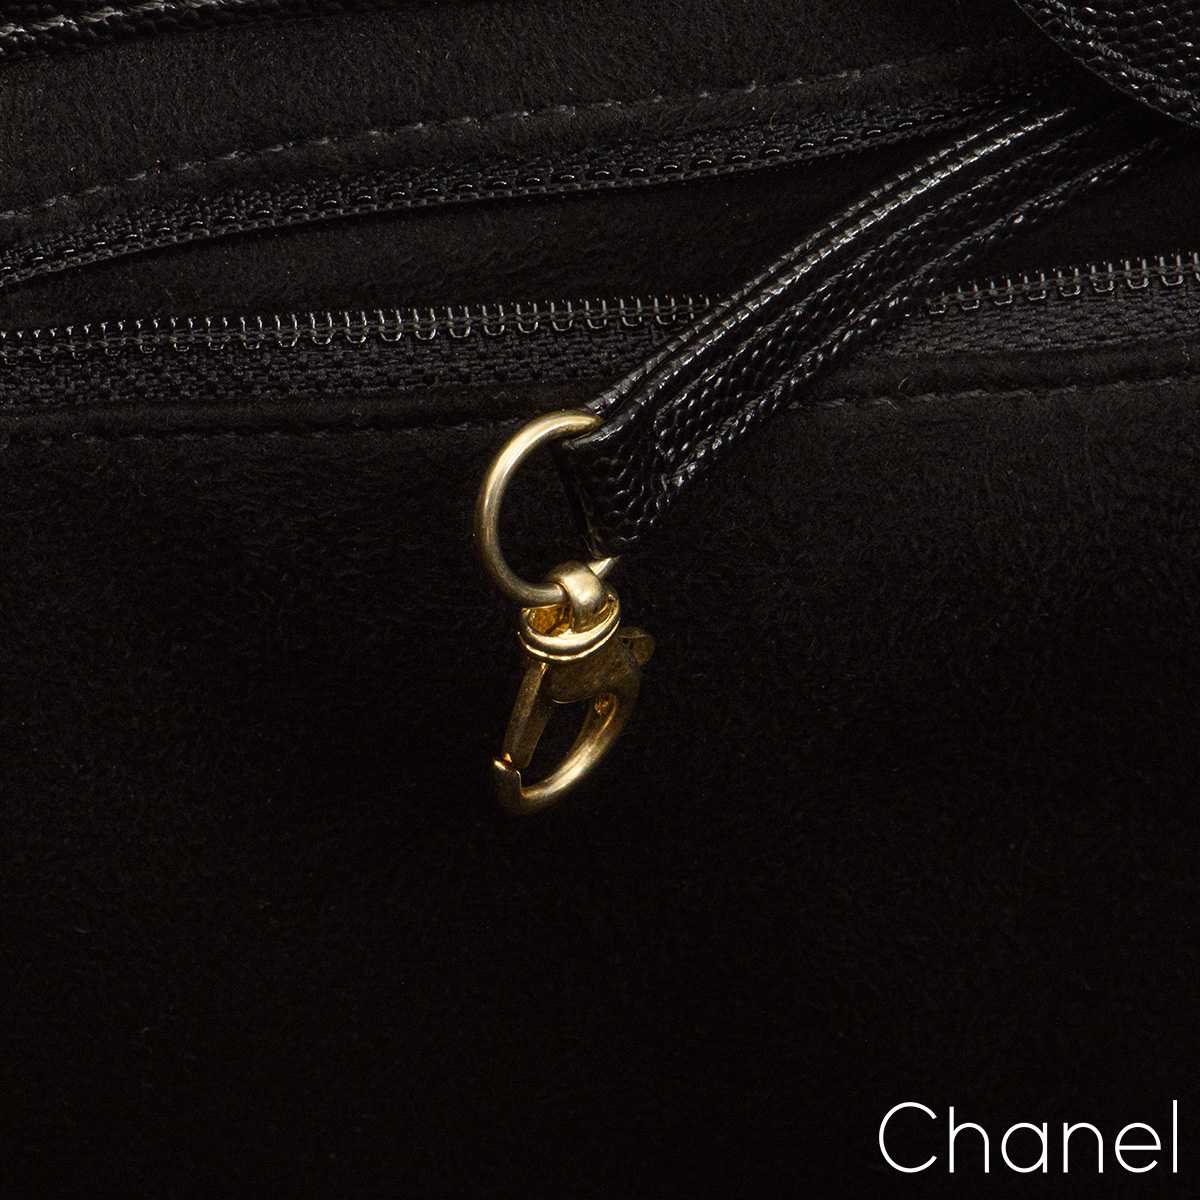 Chanel deauville black leather - Gem